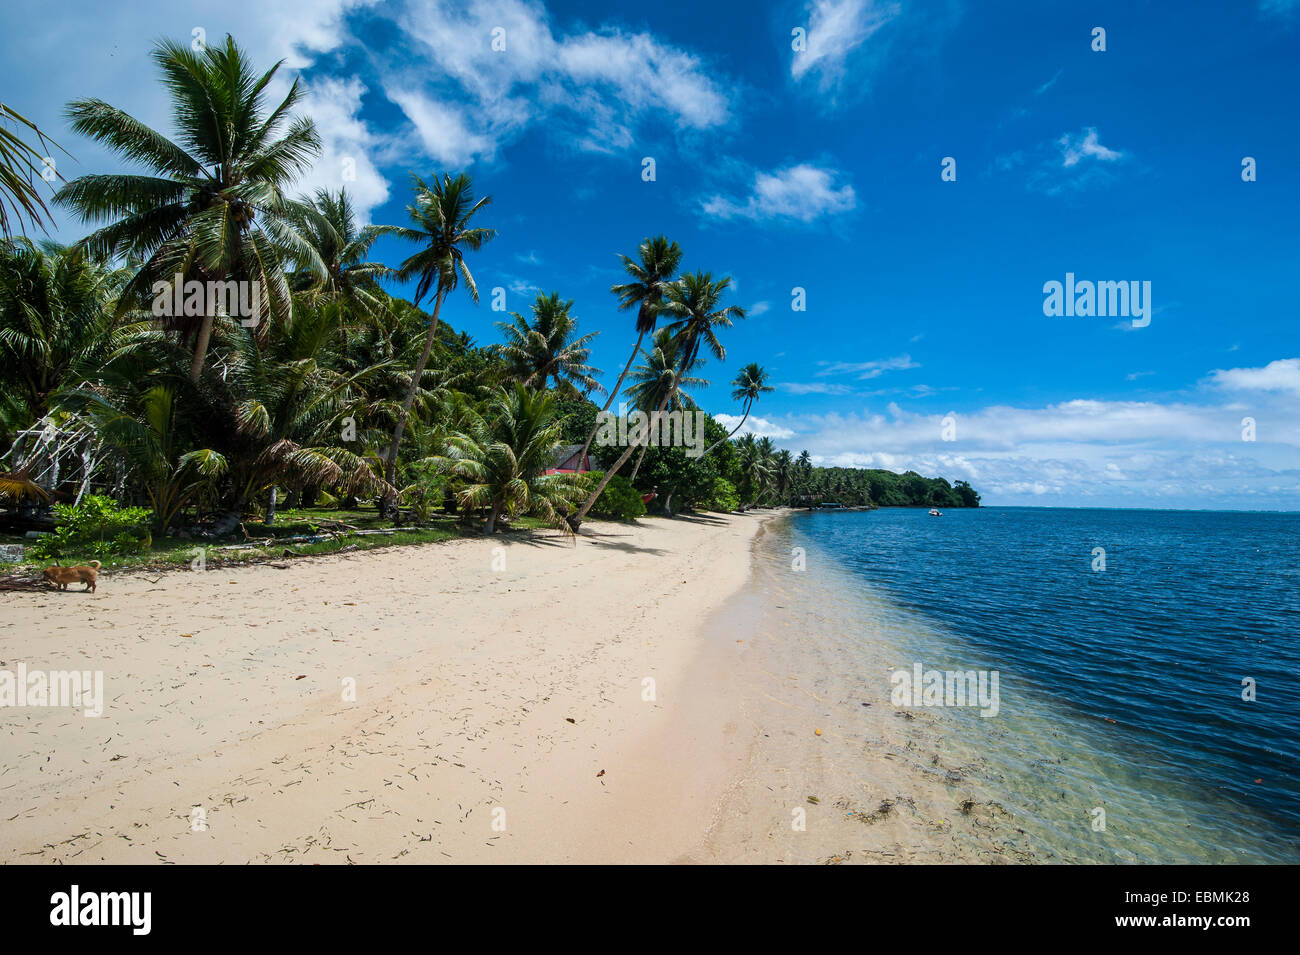 Spiaggia di sabbia bianca e palme, Yap Island, Isole Caroline, Stati Federati di Micronesia Foto Stock